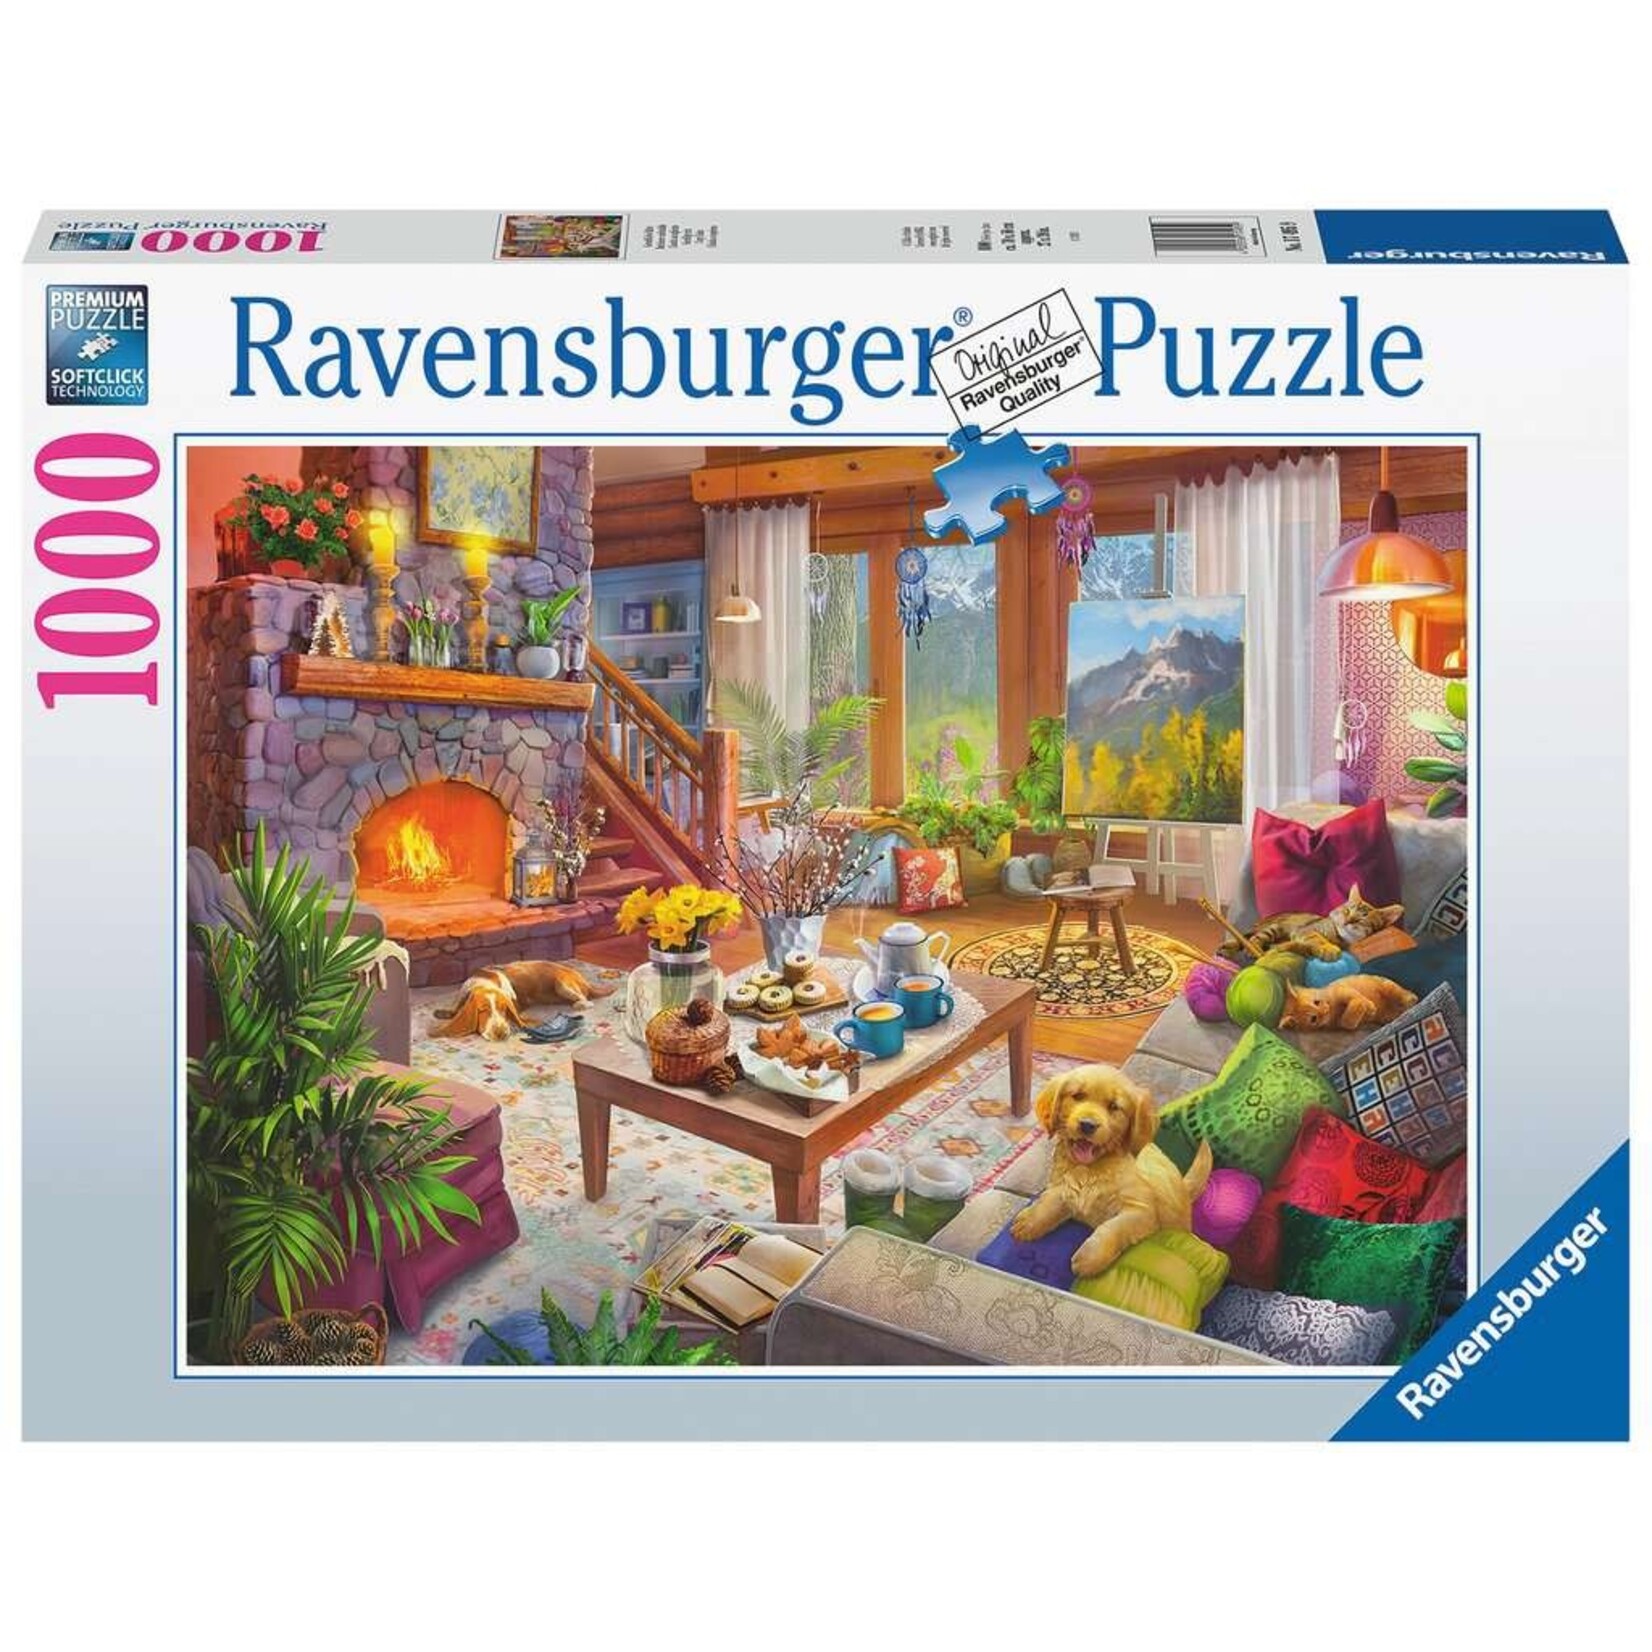 Ravensburger RAV12000293 Cozy Cabin (Puzzle1000)